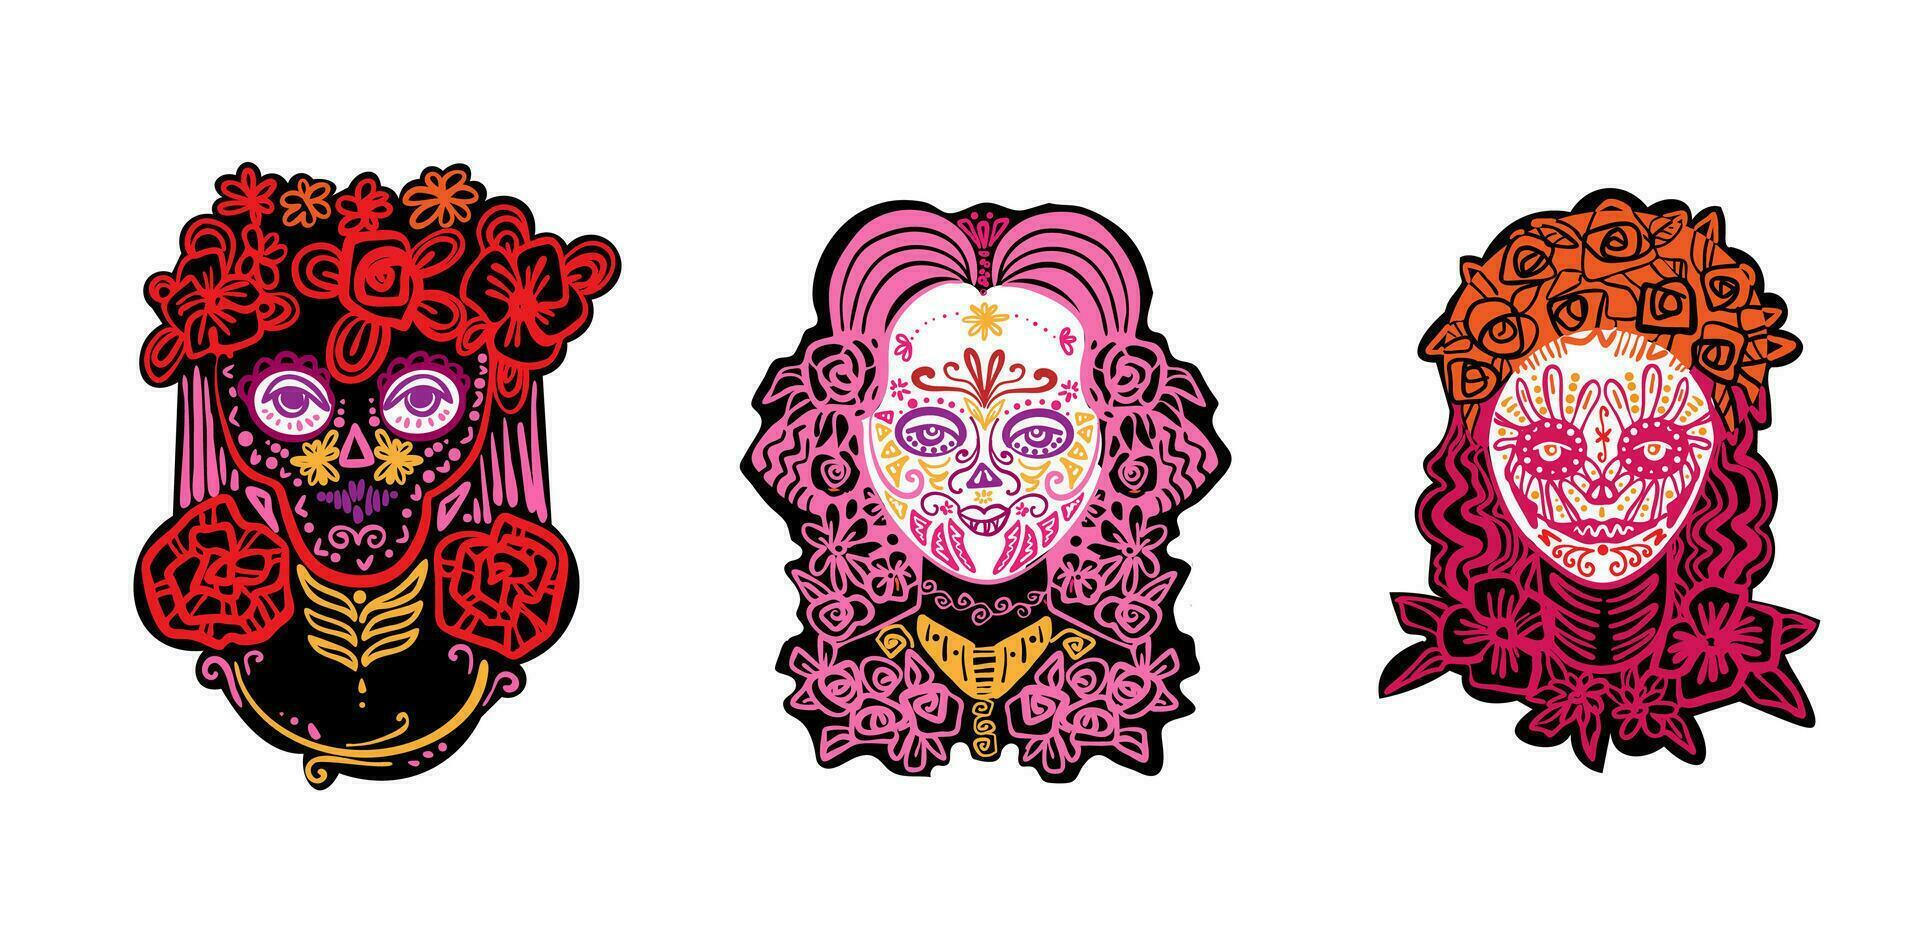 dag av de död- kvinna med socker skalle ansikte. samling ikoner vektor